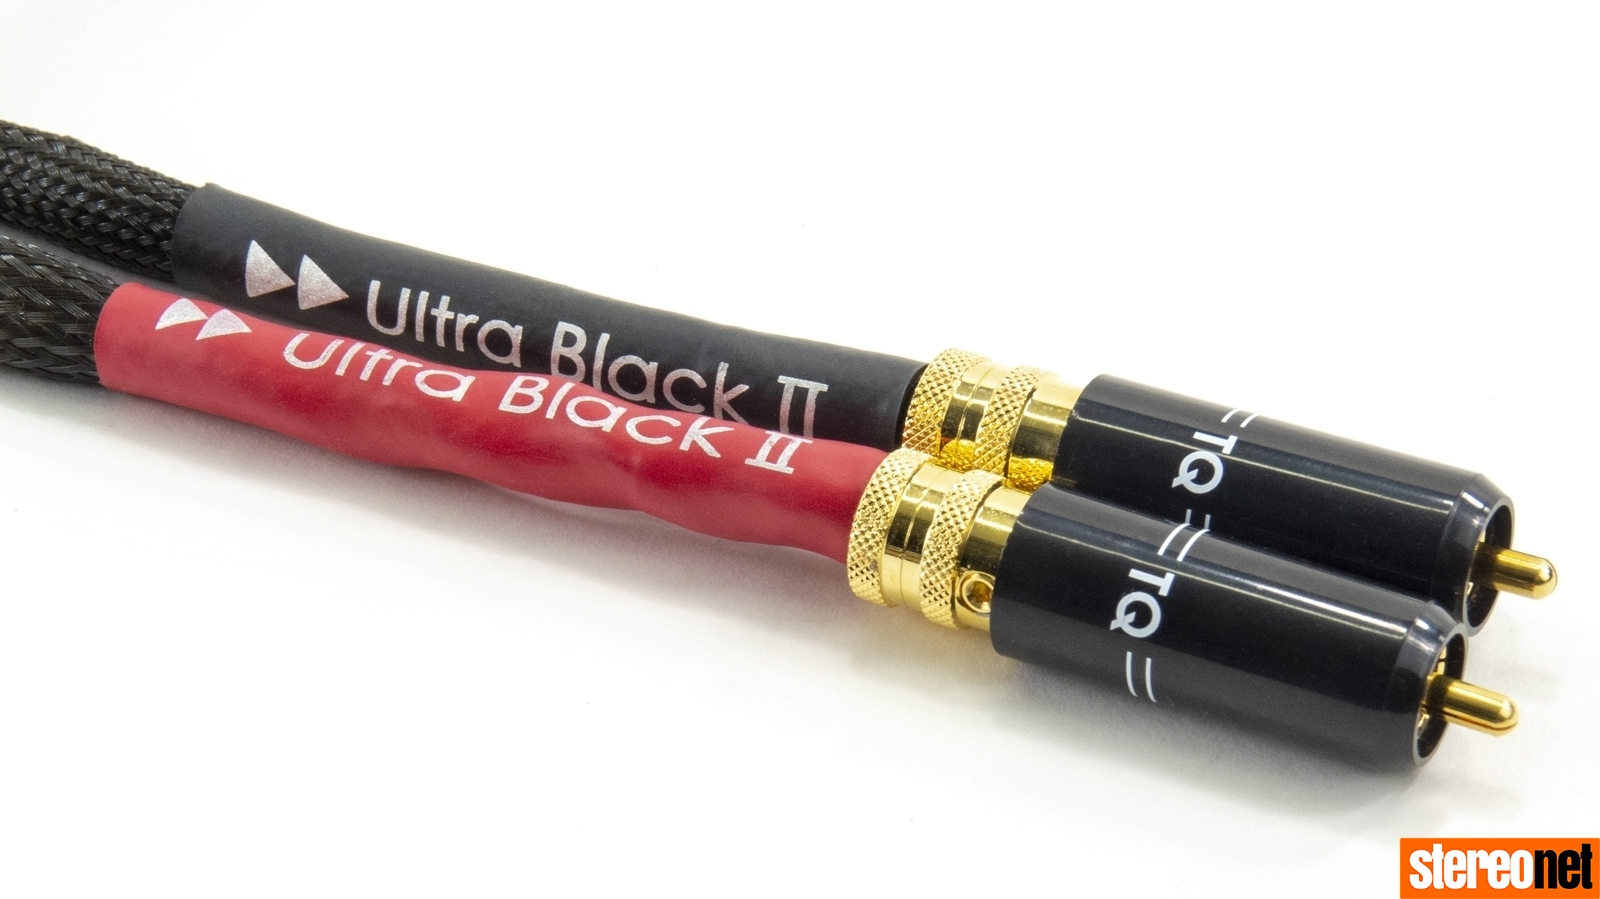 Tellurium Q Ultra Black II RCA Review